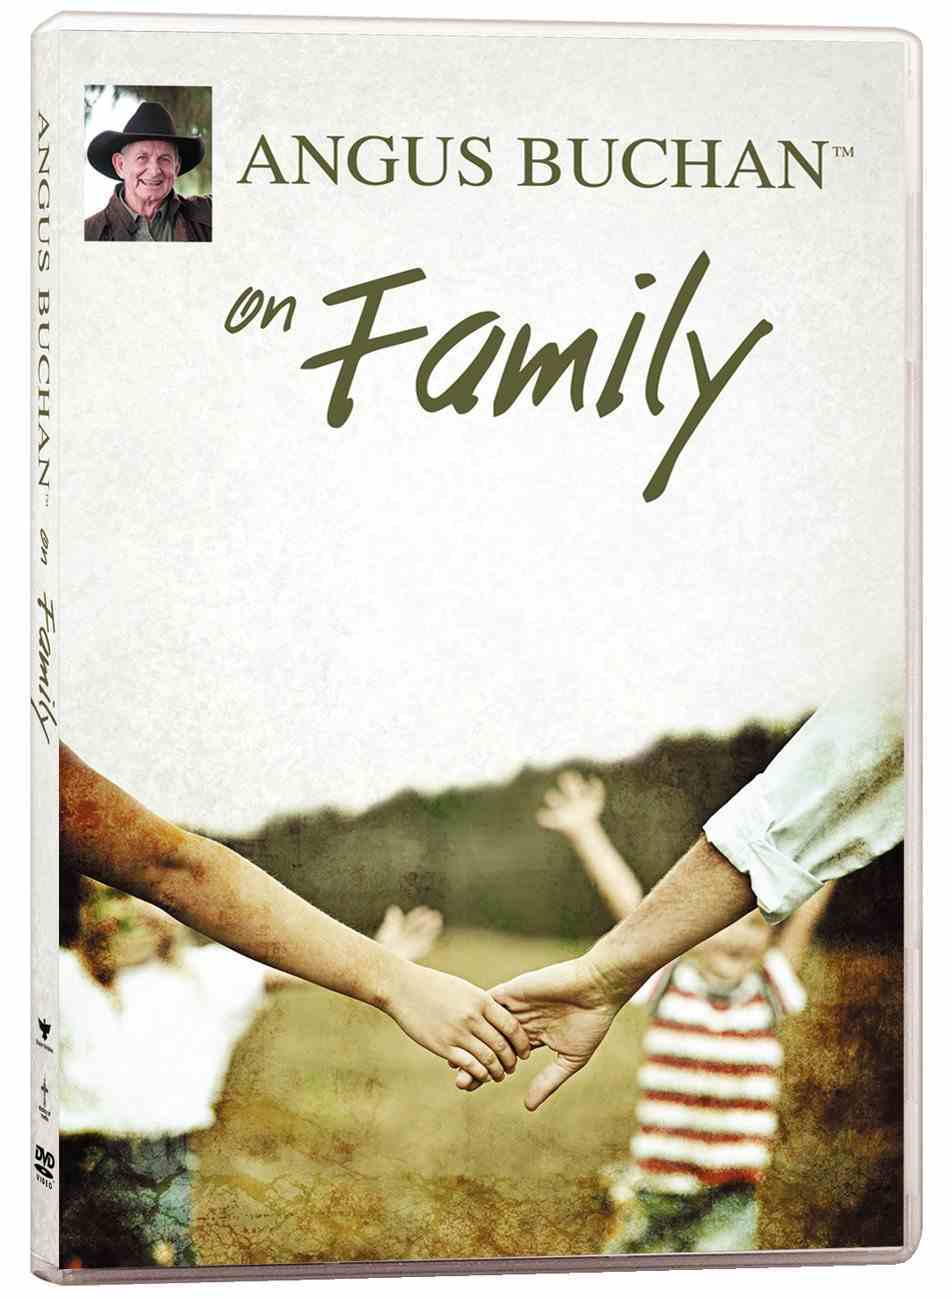 Angus Buchan on Family DVD